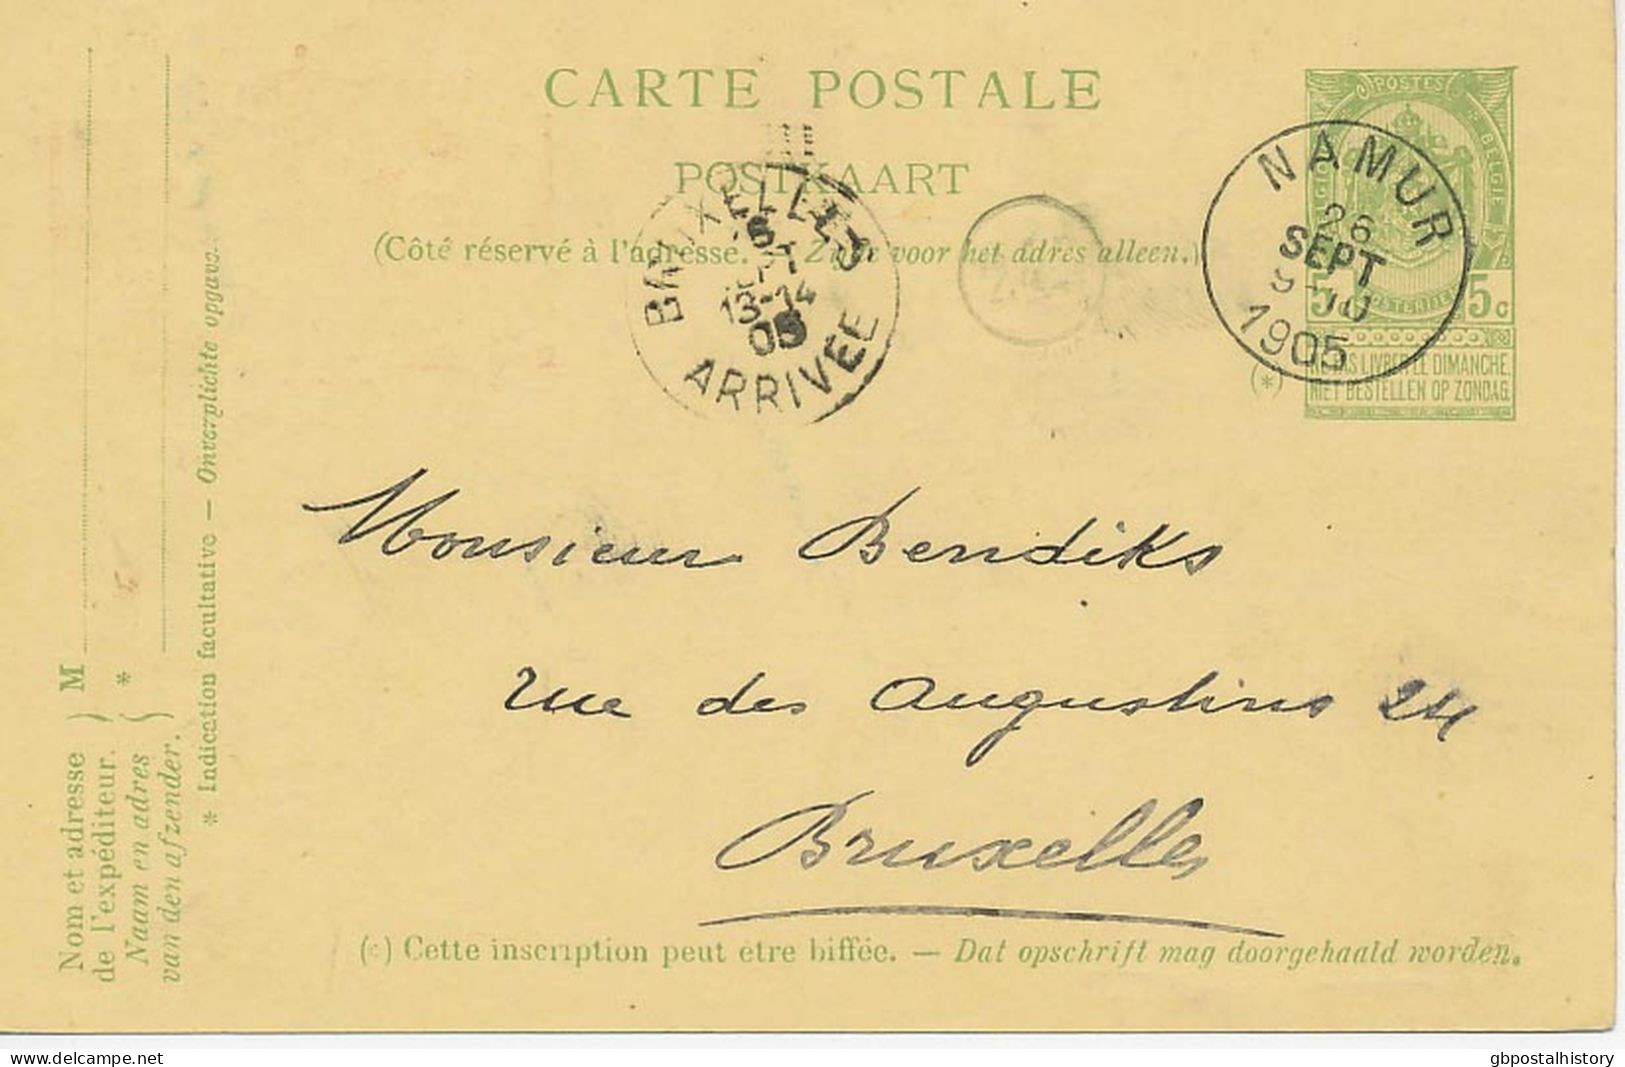 BELGIEN 1905 Wappen 5C Postkarte Mit K1 "NAMUR" Kab.-GA M. Ank.-Stpl. "BRUXELLES / ARRIVEE", ABART: Druckausfall Zwische - Sin Clasificación